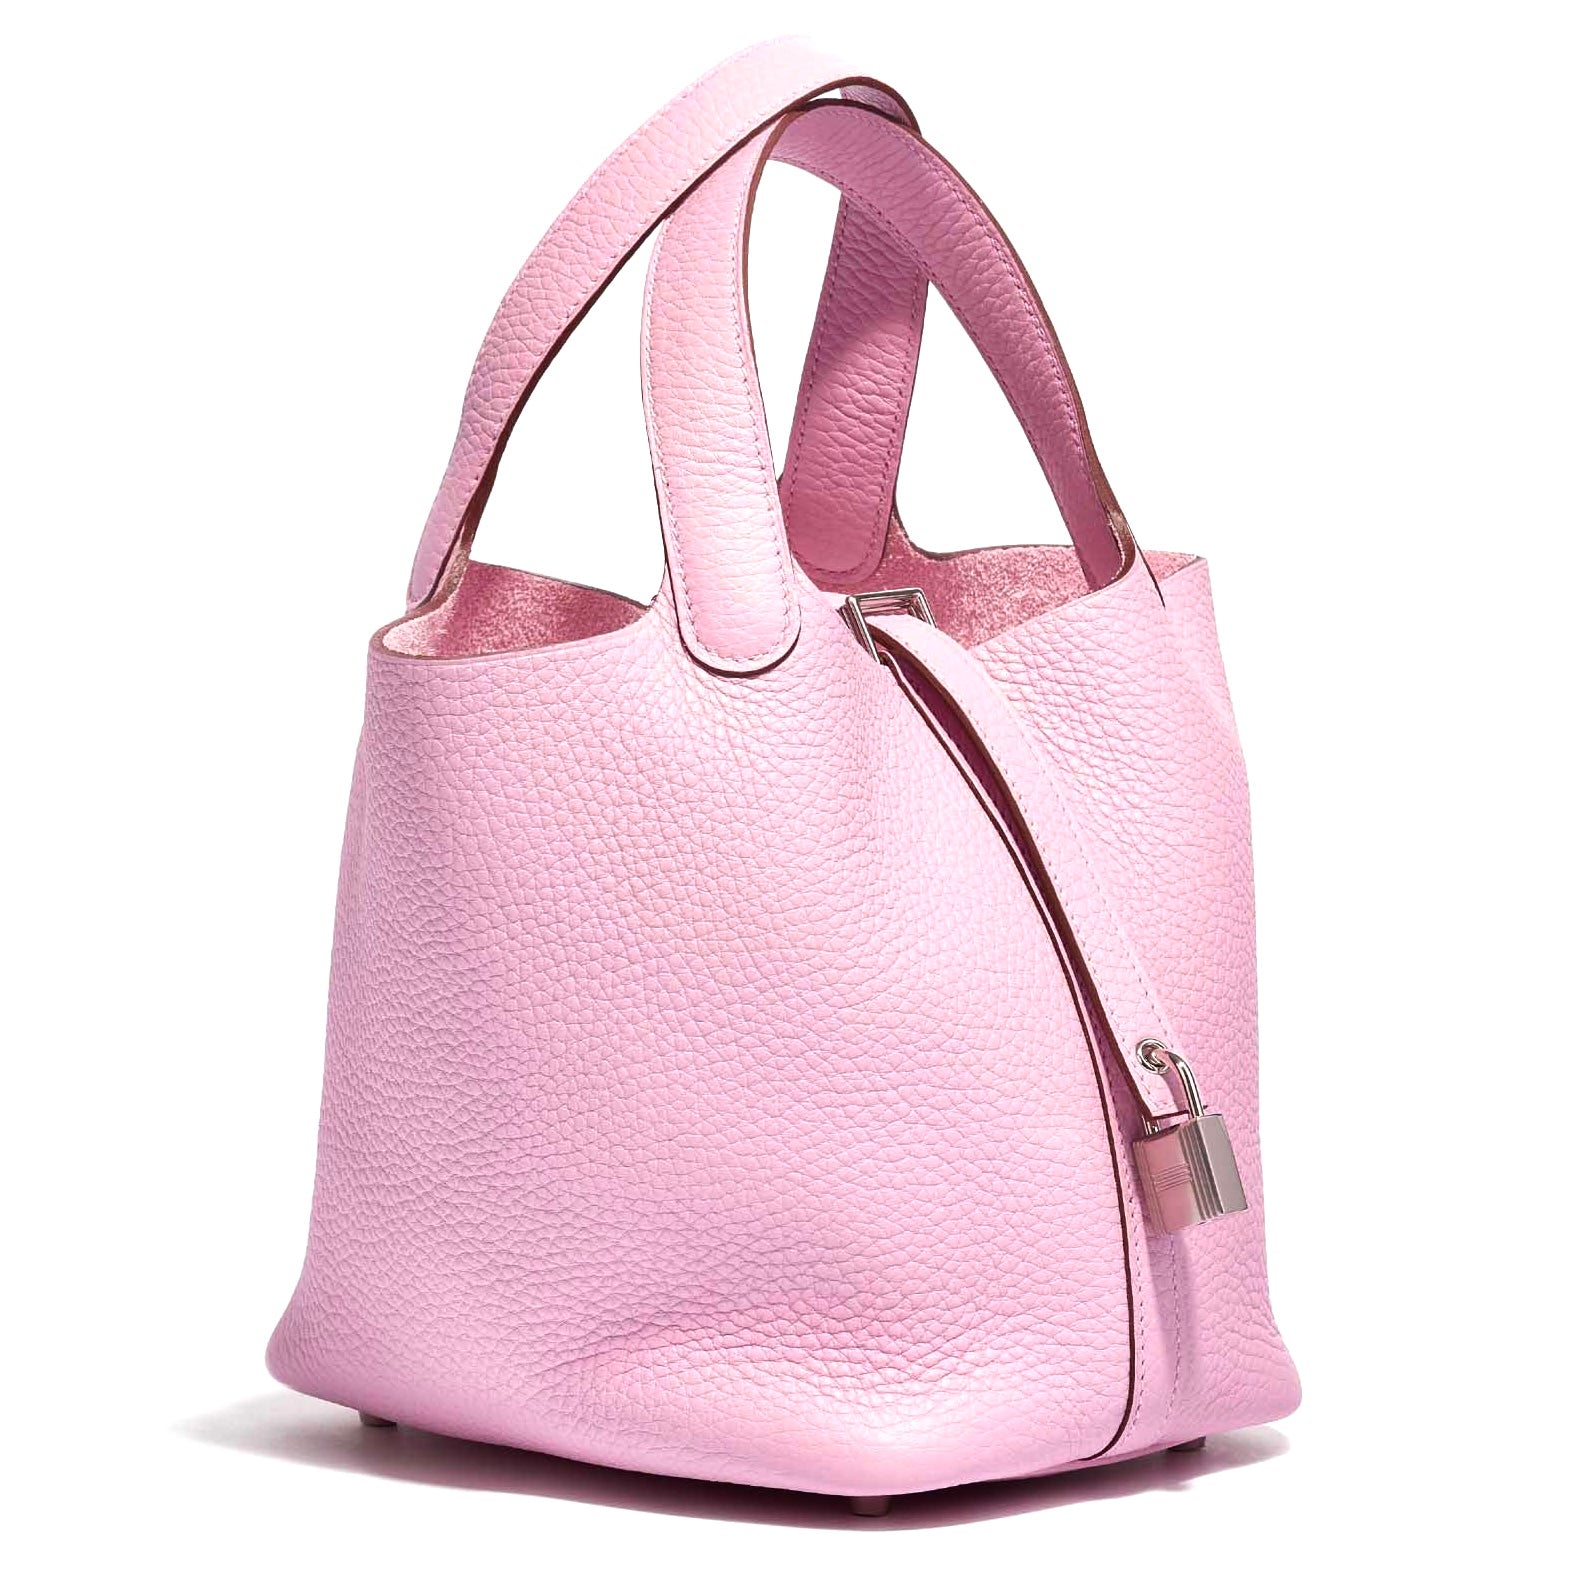 HERMES Picotin Leather Elegant Style Handbags